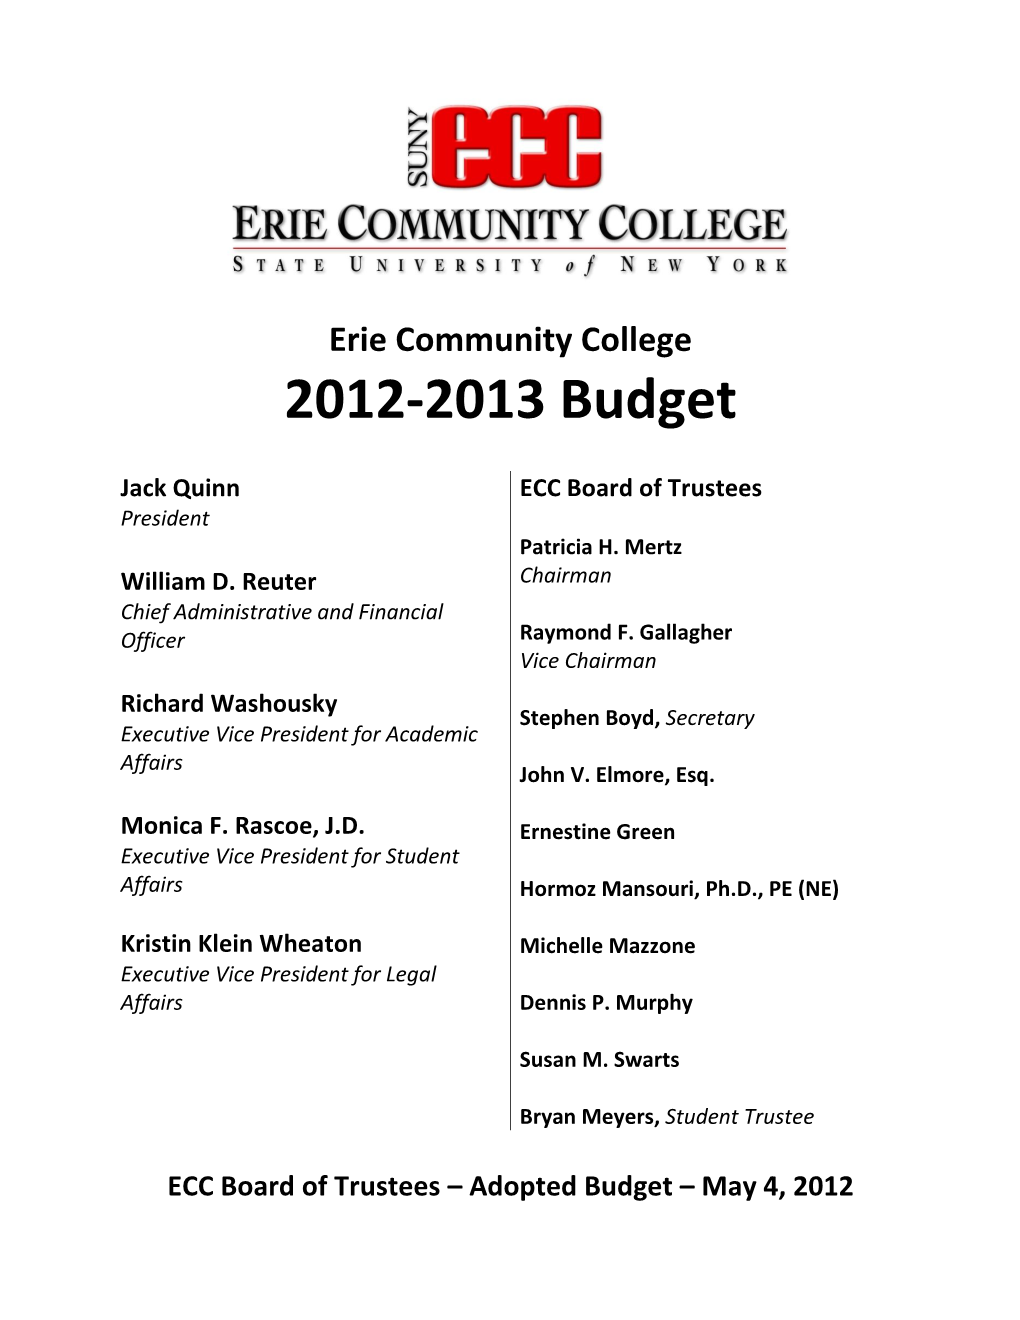 Erie Community College 2012-2013 Budget